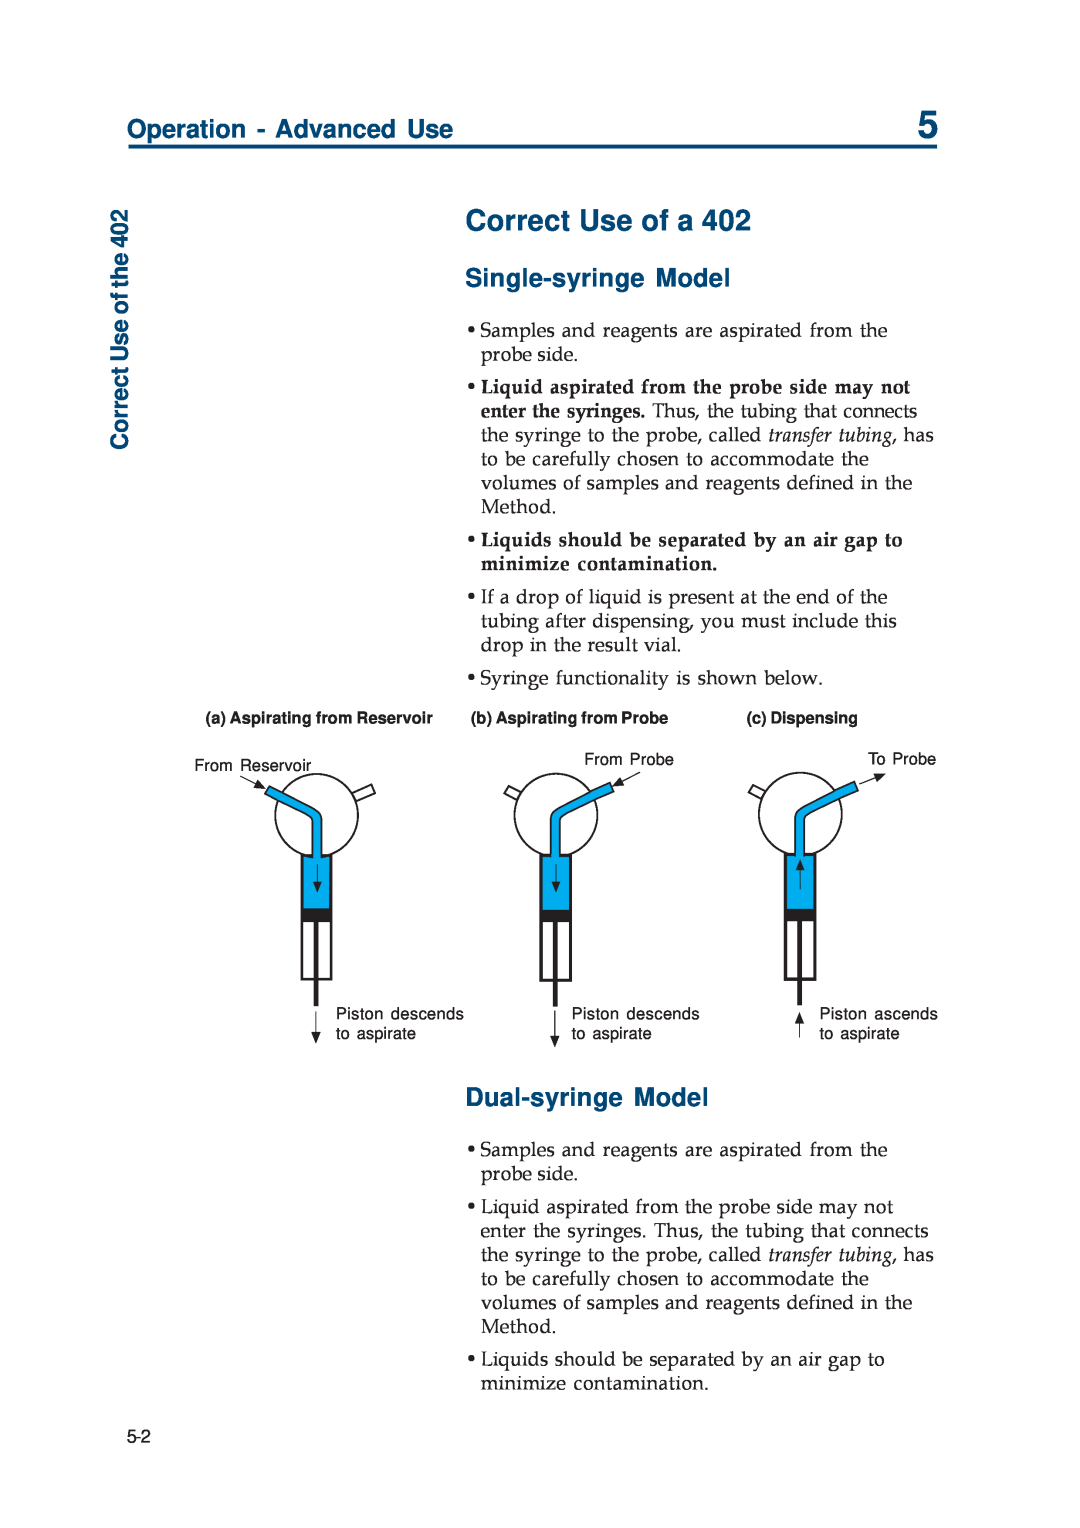 Gilson 402 manual Correct Use of a, Operation - Advanced Use, Correct Use of the, Single-syringe Model, Dual-syringe Model 